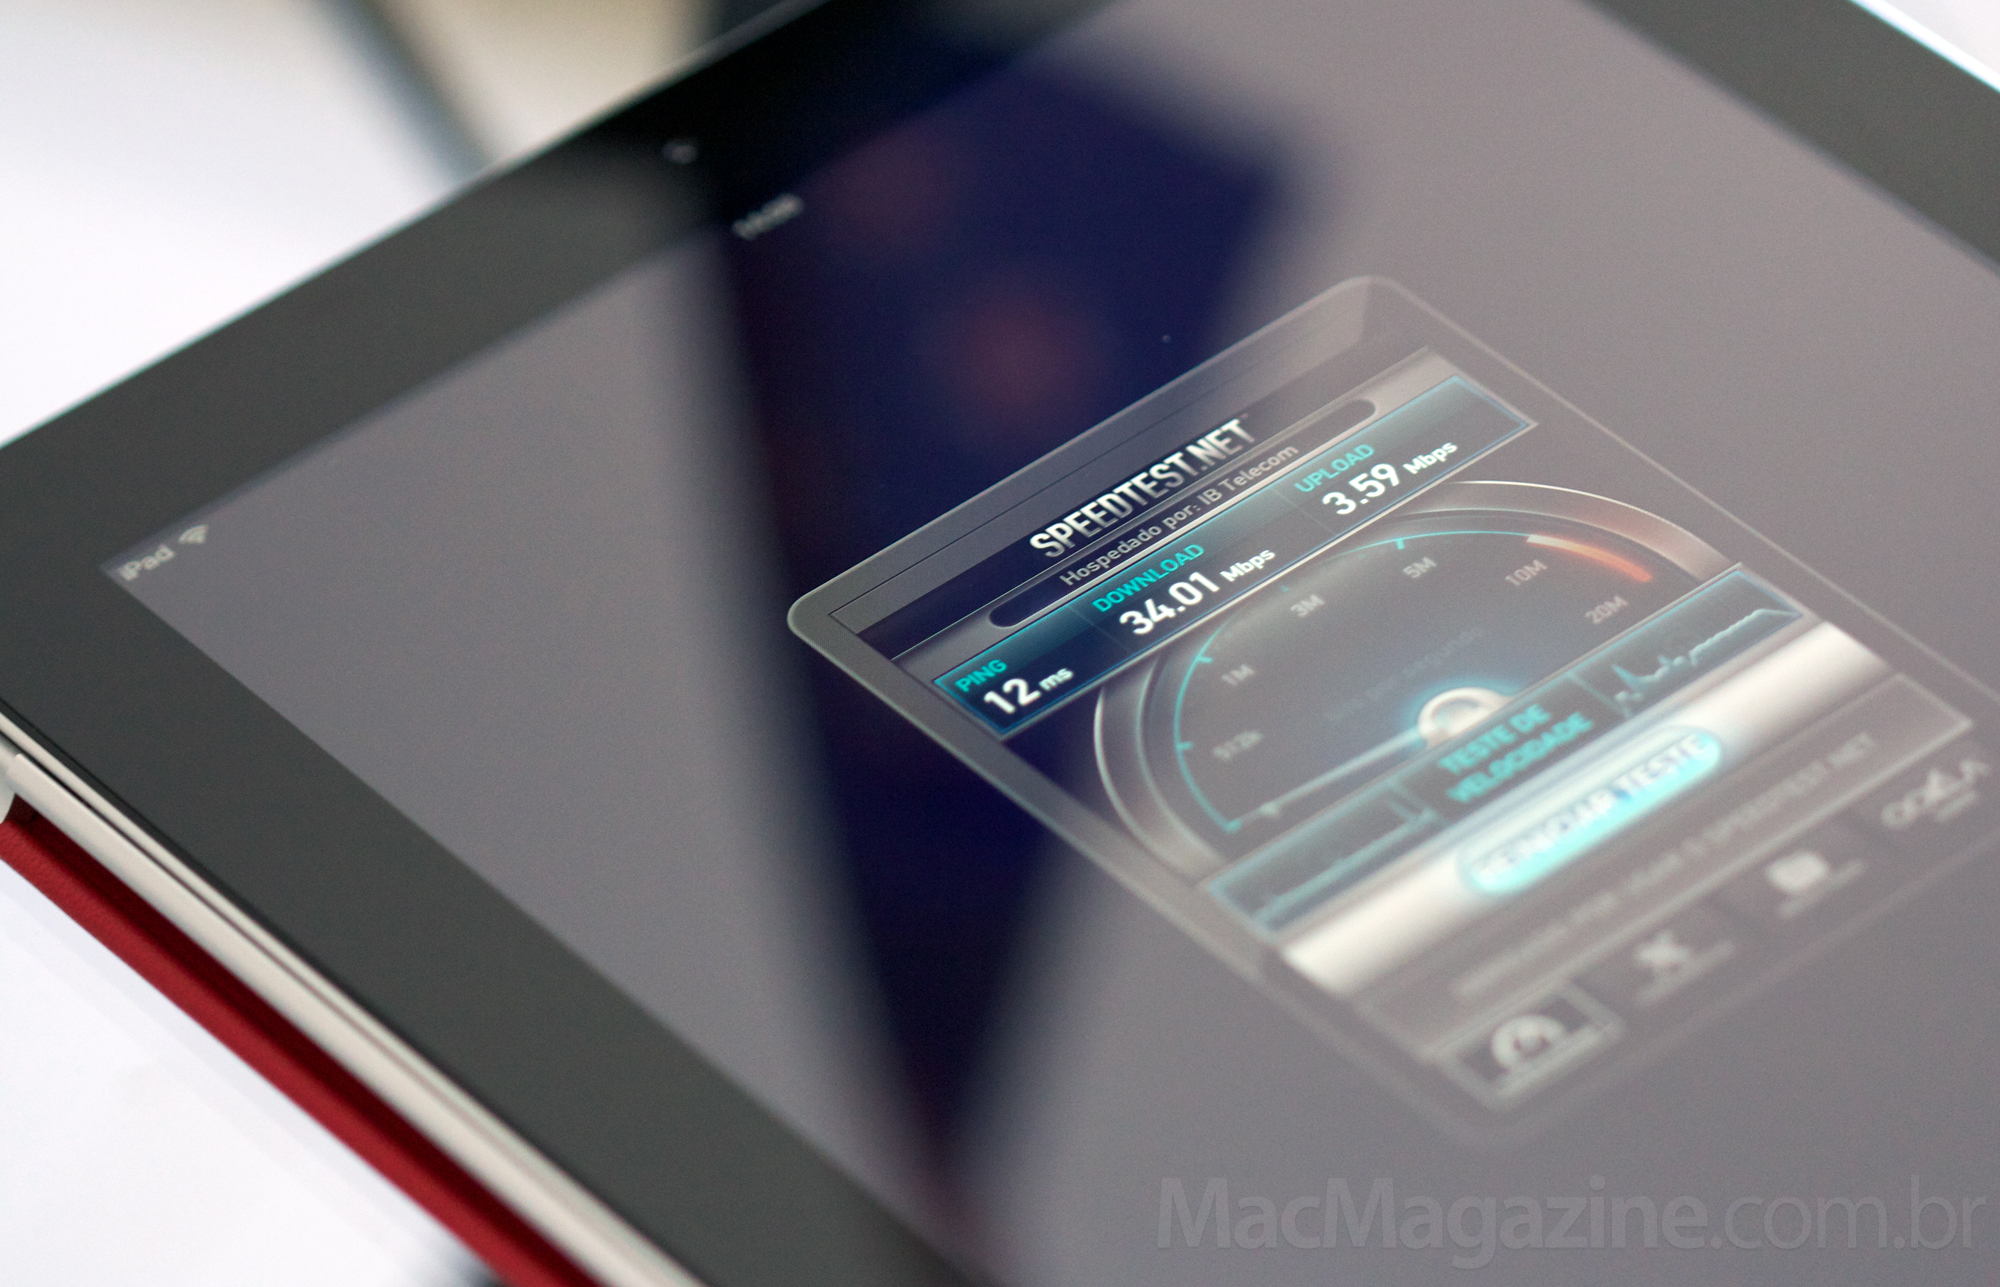 Novo iPad rodando SpeedTest via Wi-Fi